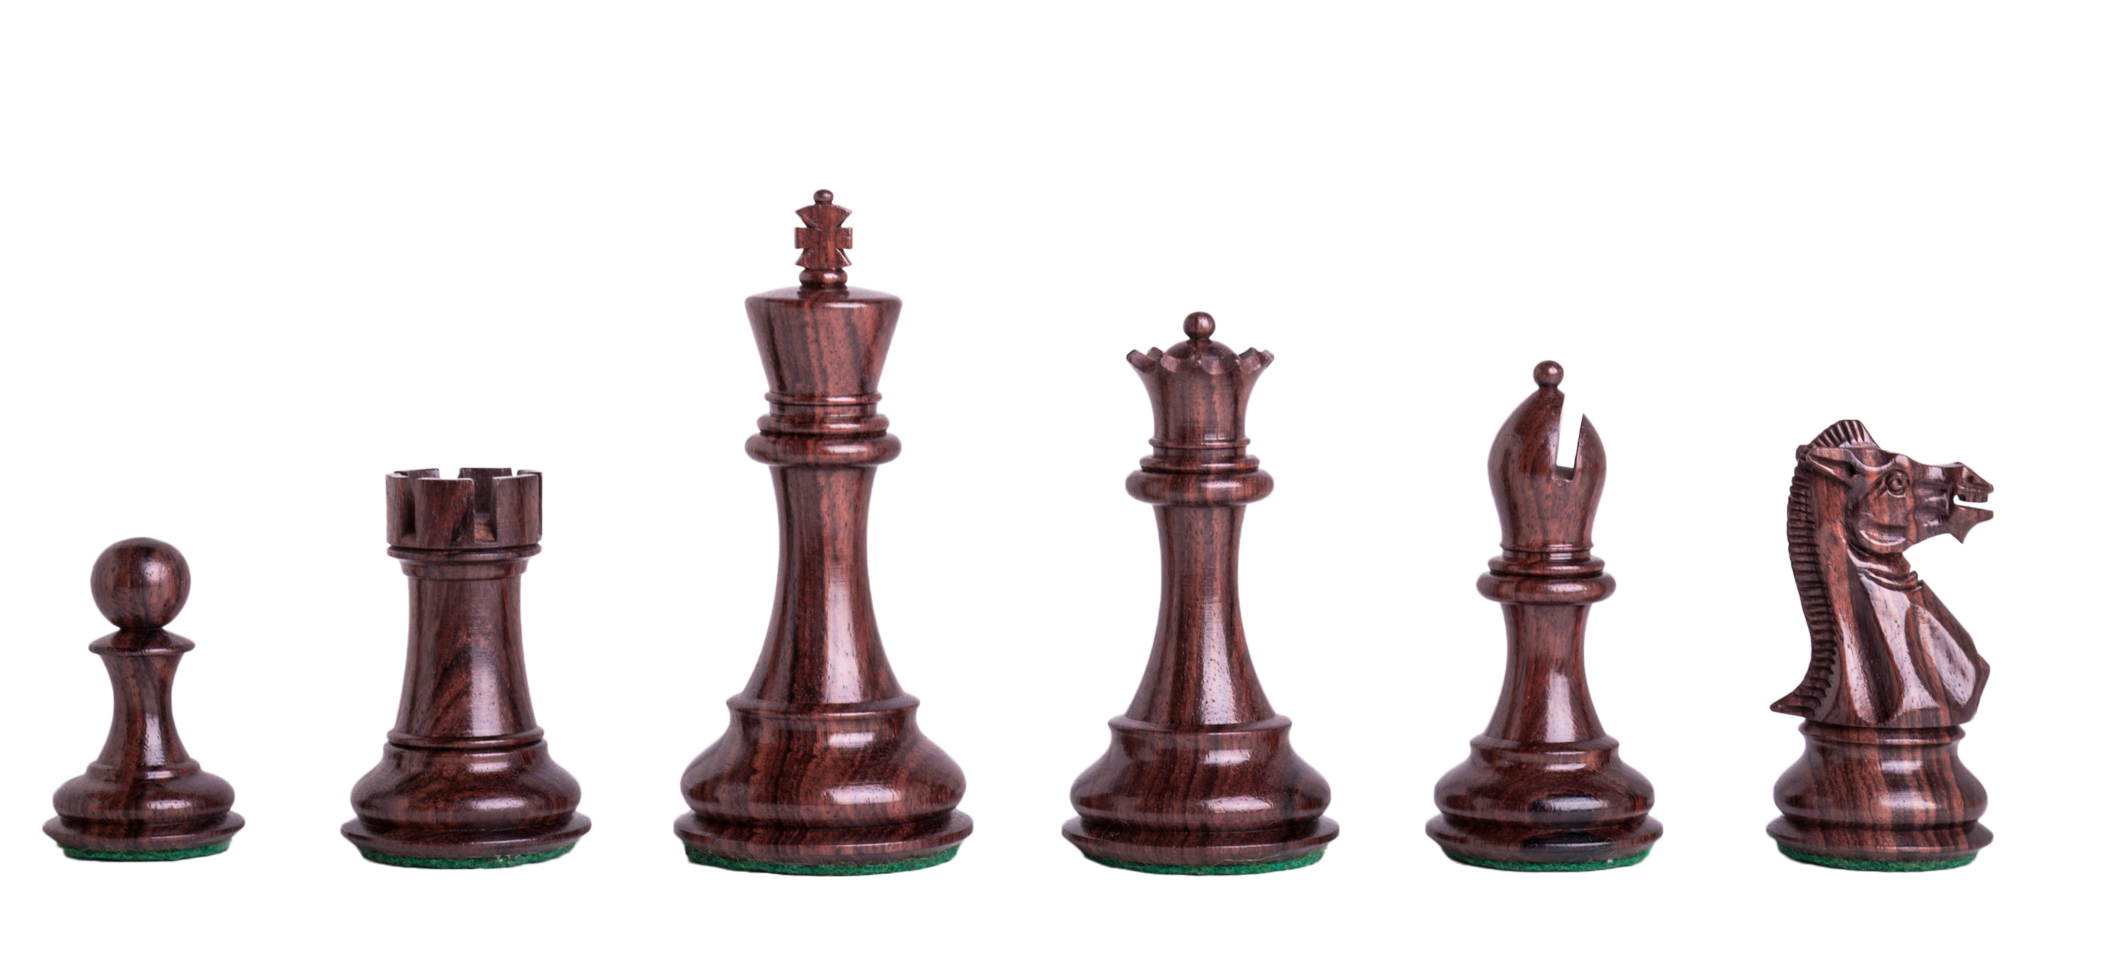 favorite chess set photo #39306